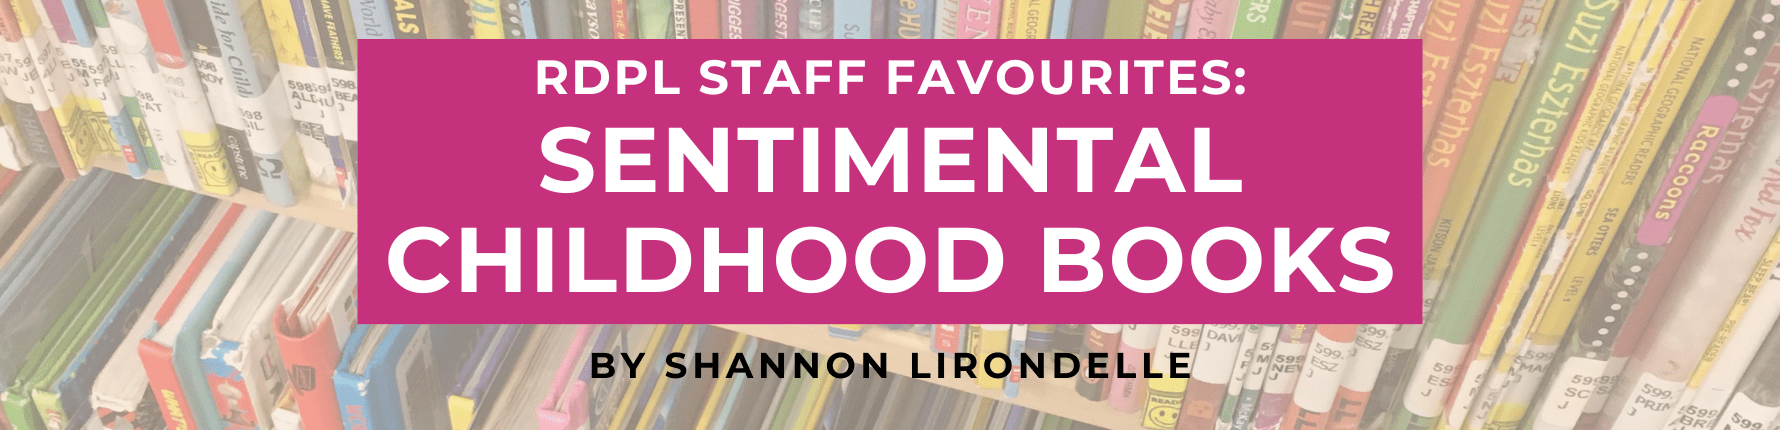 RDPL Staff Favourites: Sentimental Childhood Books By Shannon Lirondelle